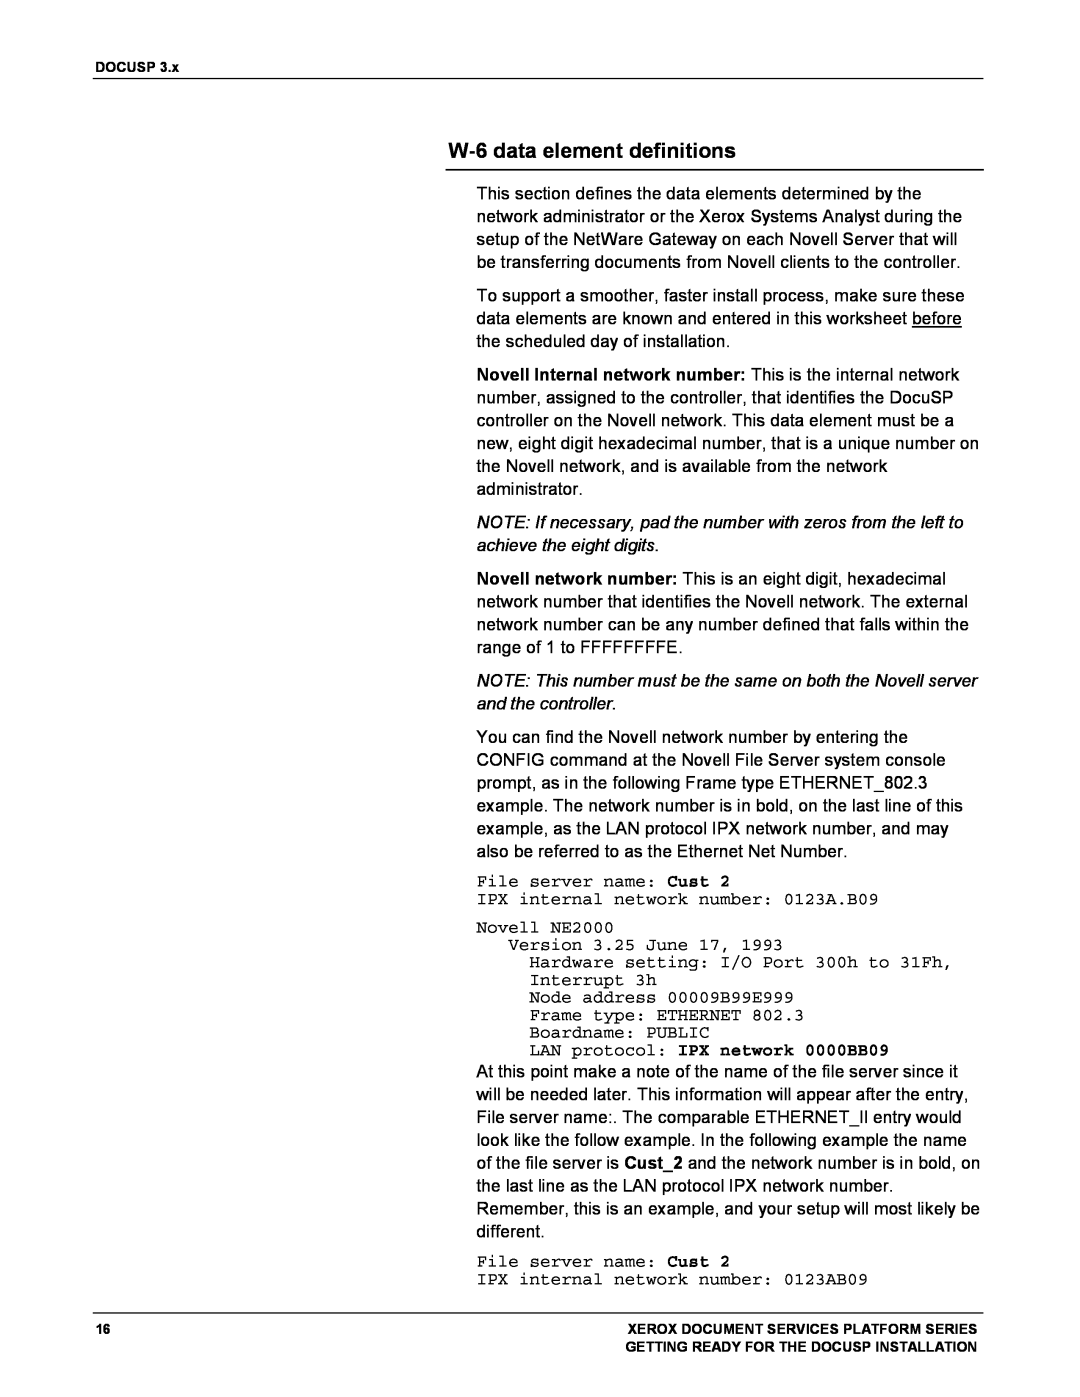 Xerox 701P38969 manual W-6data element definitions, LAN protocol: IPX network 0000BB09 